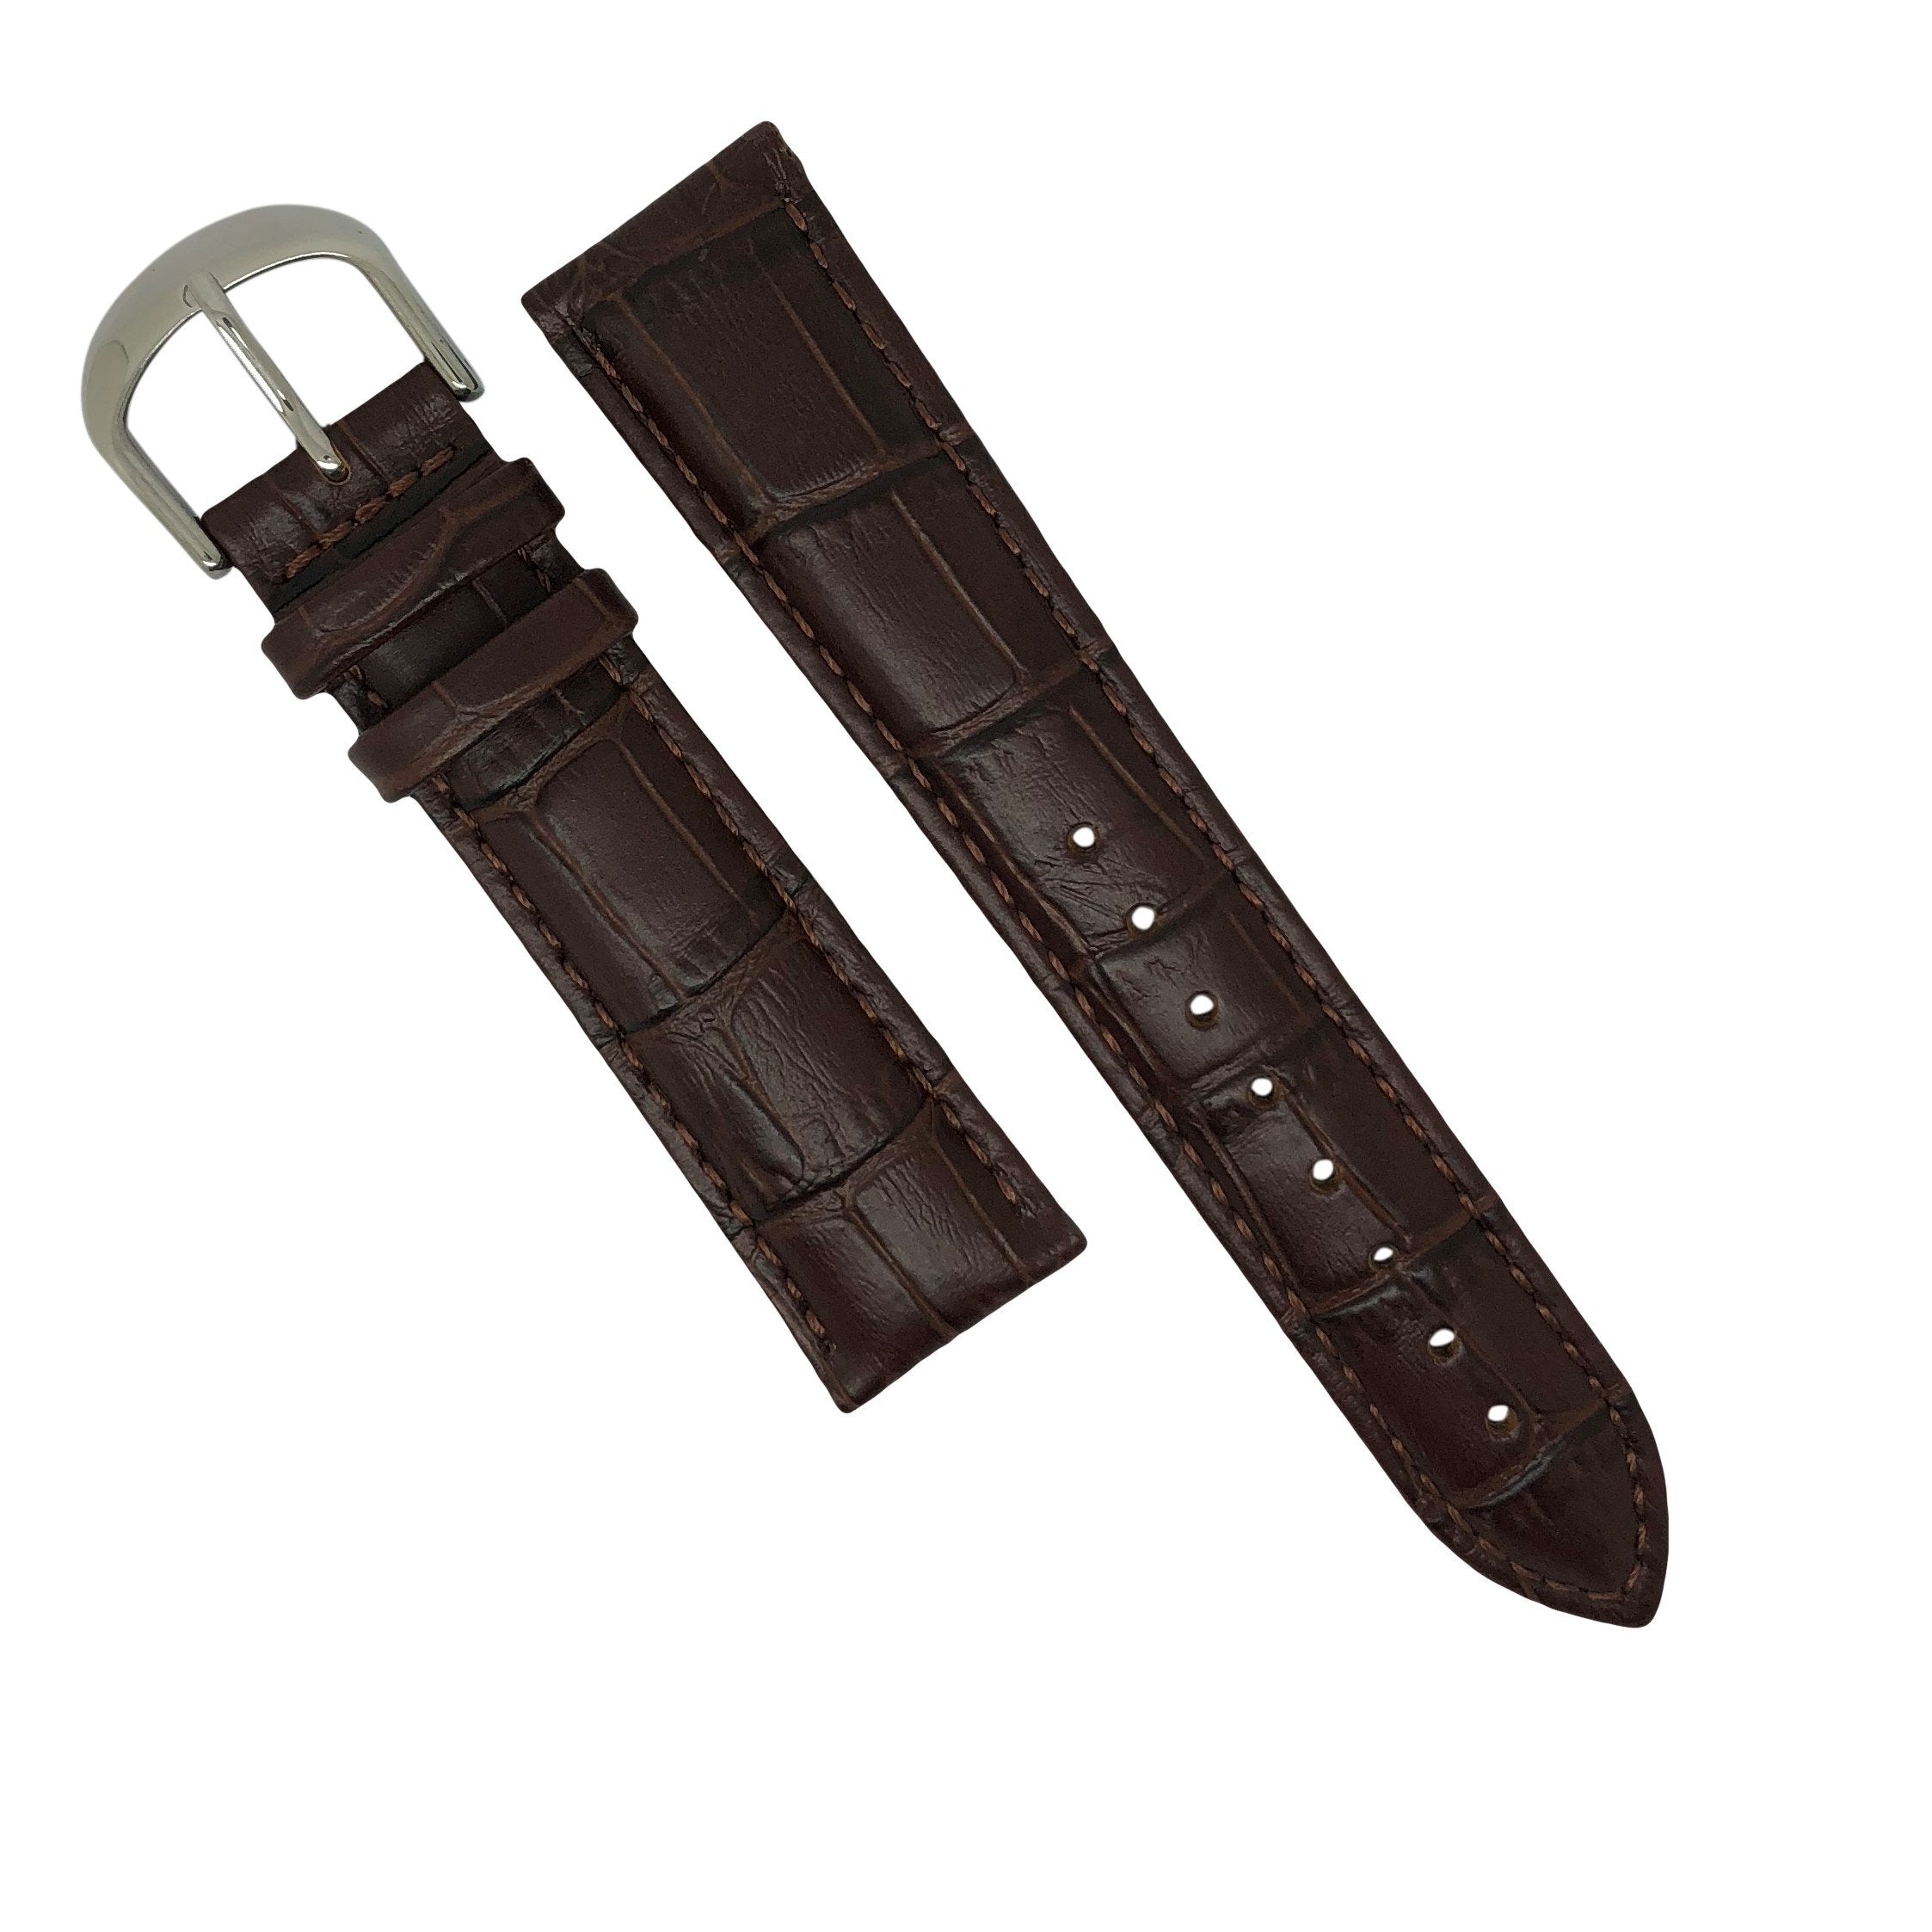 Genuine Croc Pattern Stitched Leather Watch Strap in Brown (12mm) - Nomad watch Works